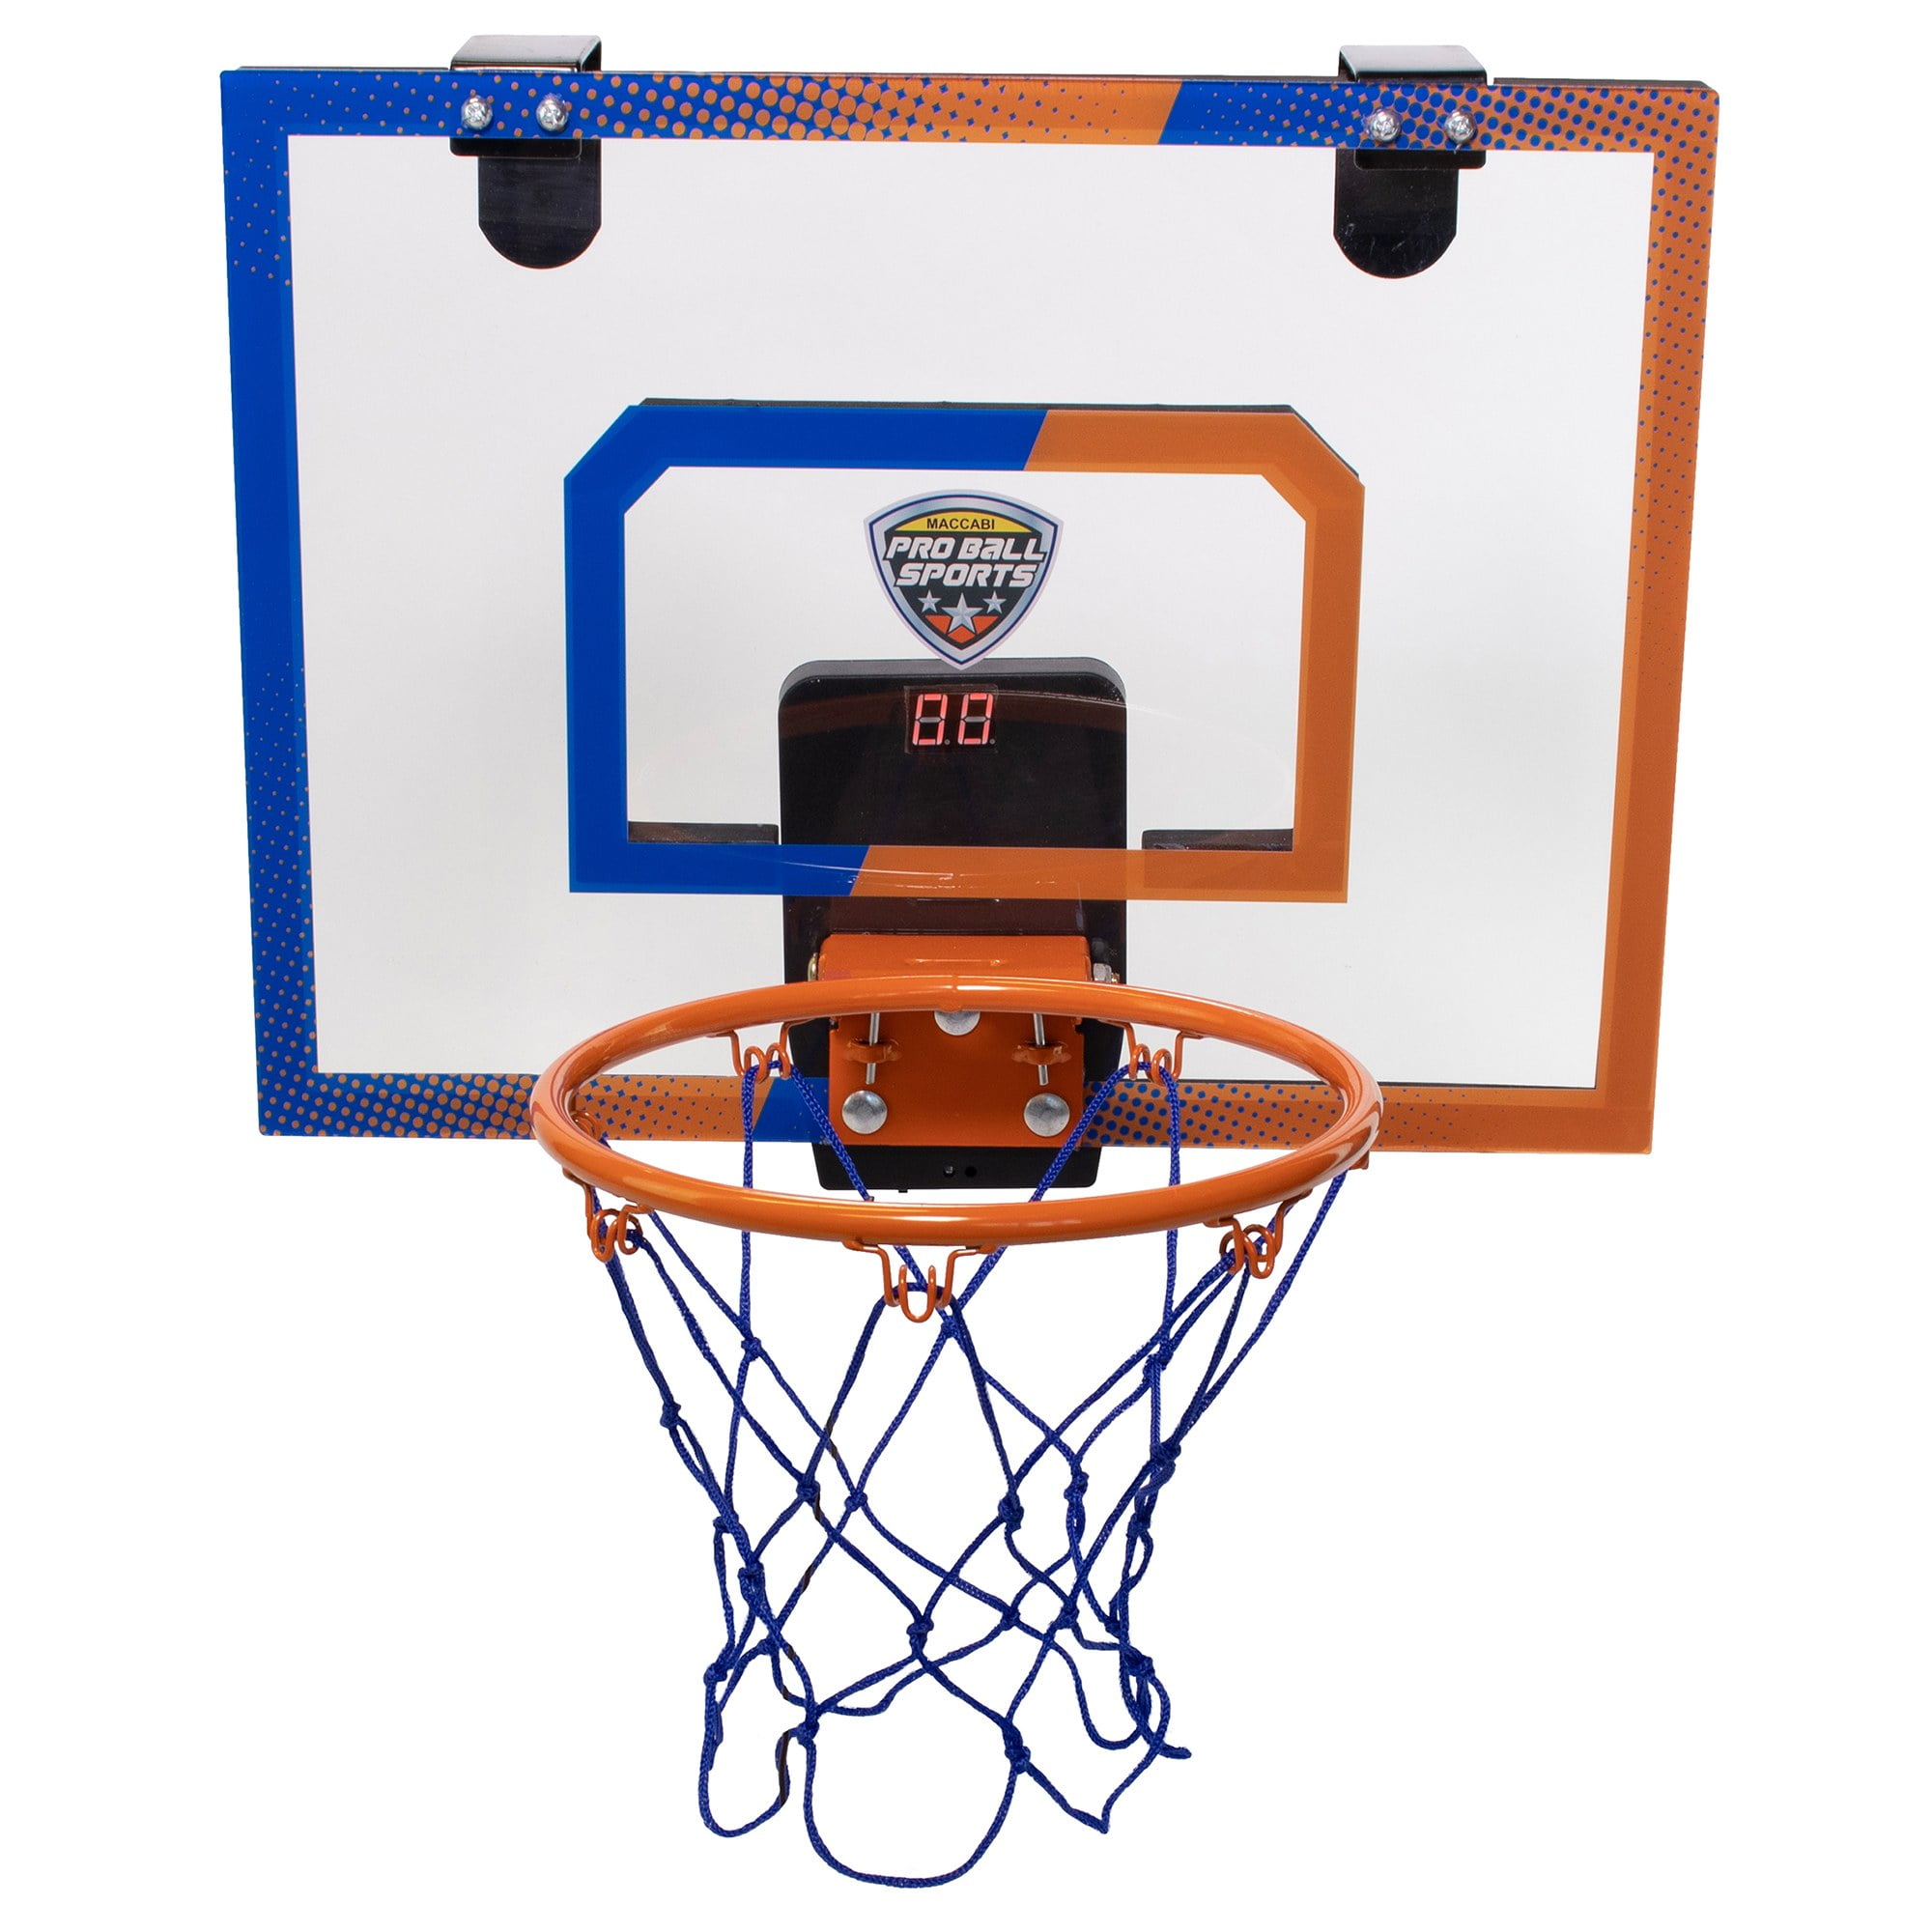 Arcade Basketball Games (Online Battle & Challenge, Shoot Hoops) -  Electronic Basketball Arcade Games, Dual Shot / Blue